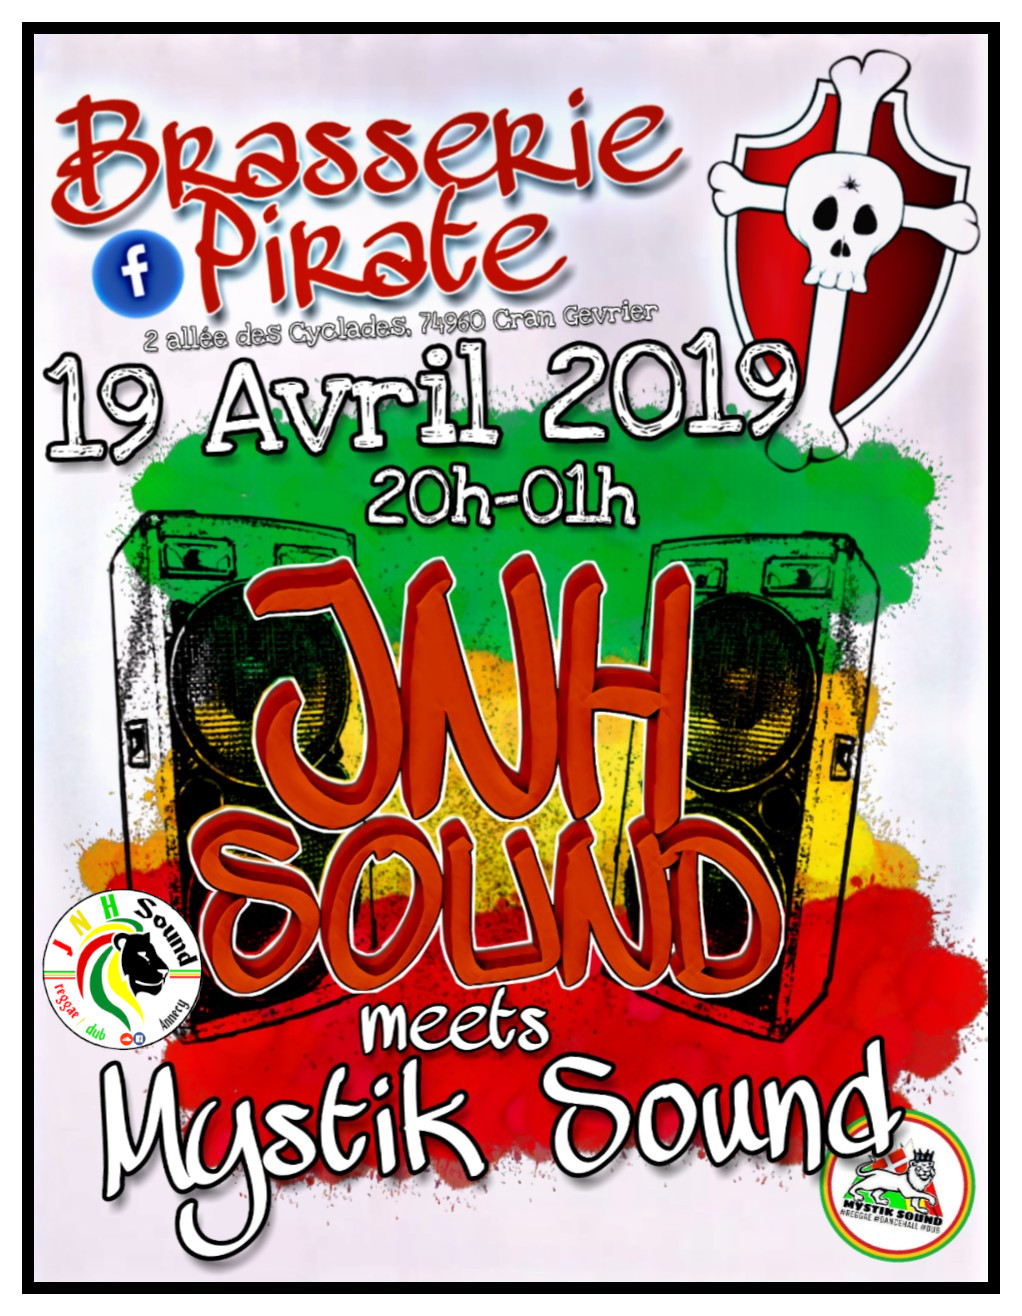 Brasserie Pirate & Sound System